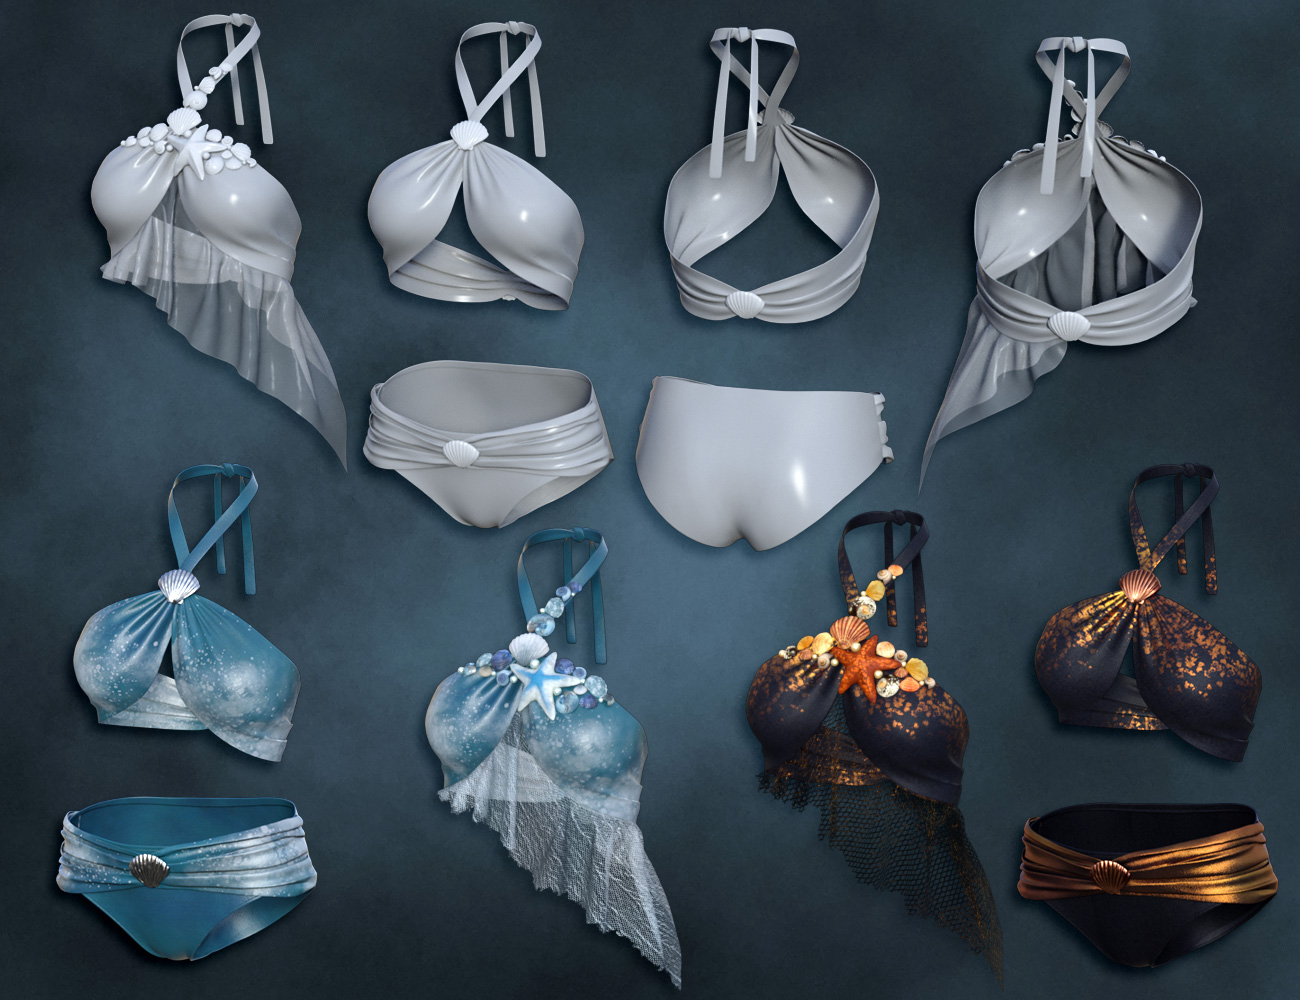 Mermaid Bikini for Genesis 8 and 8.1 Females by: esha, 3D Models by Daz 3D